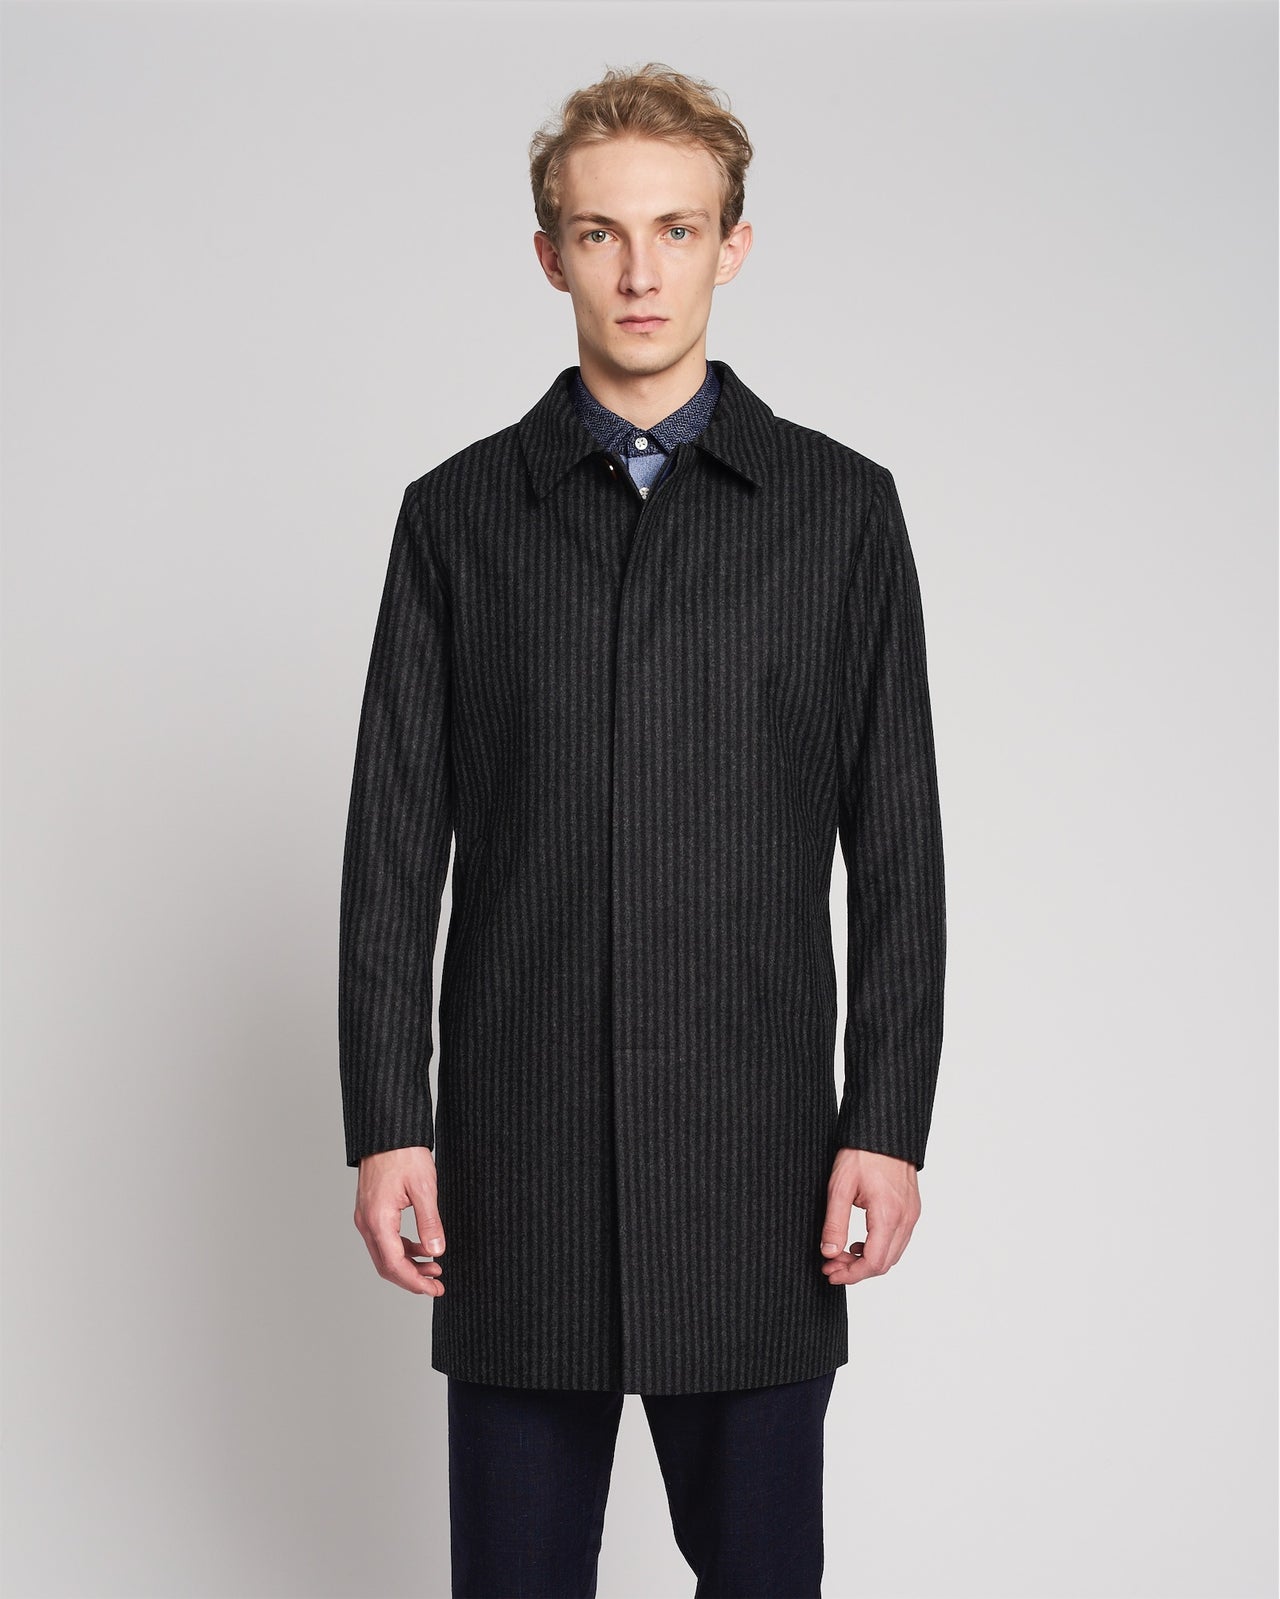 Smart Coat in a Dark Grey Tonal Striped Italian Virgin Wool with MEIDA Thermo Insulation